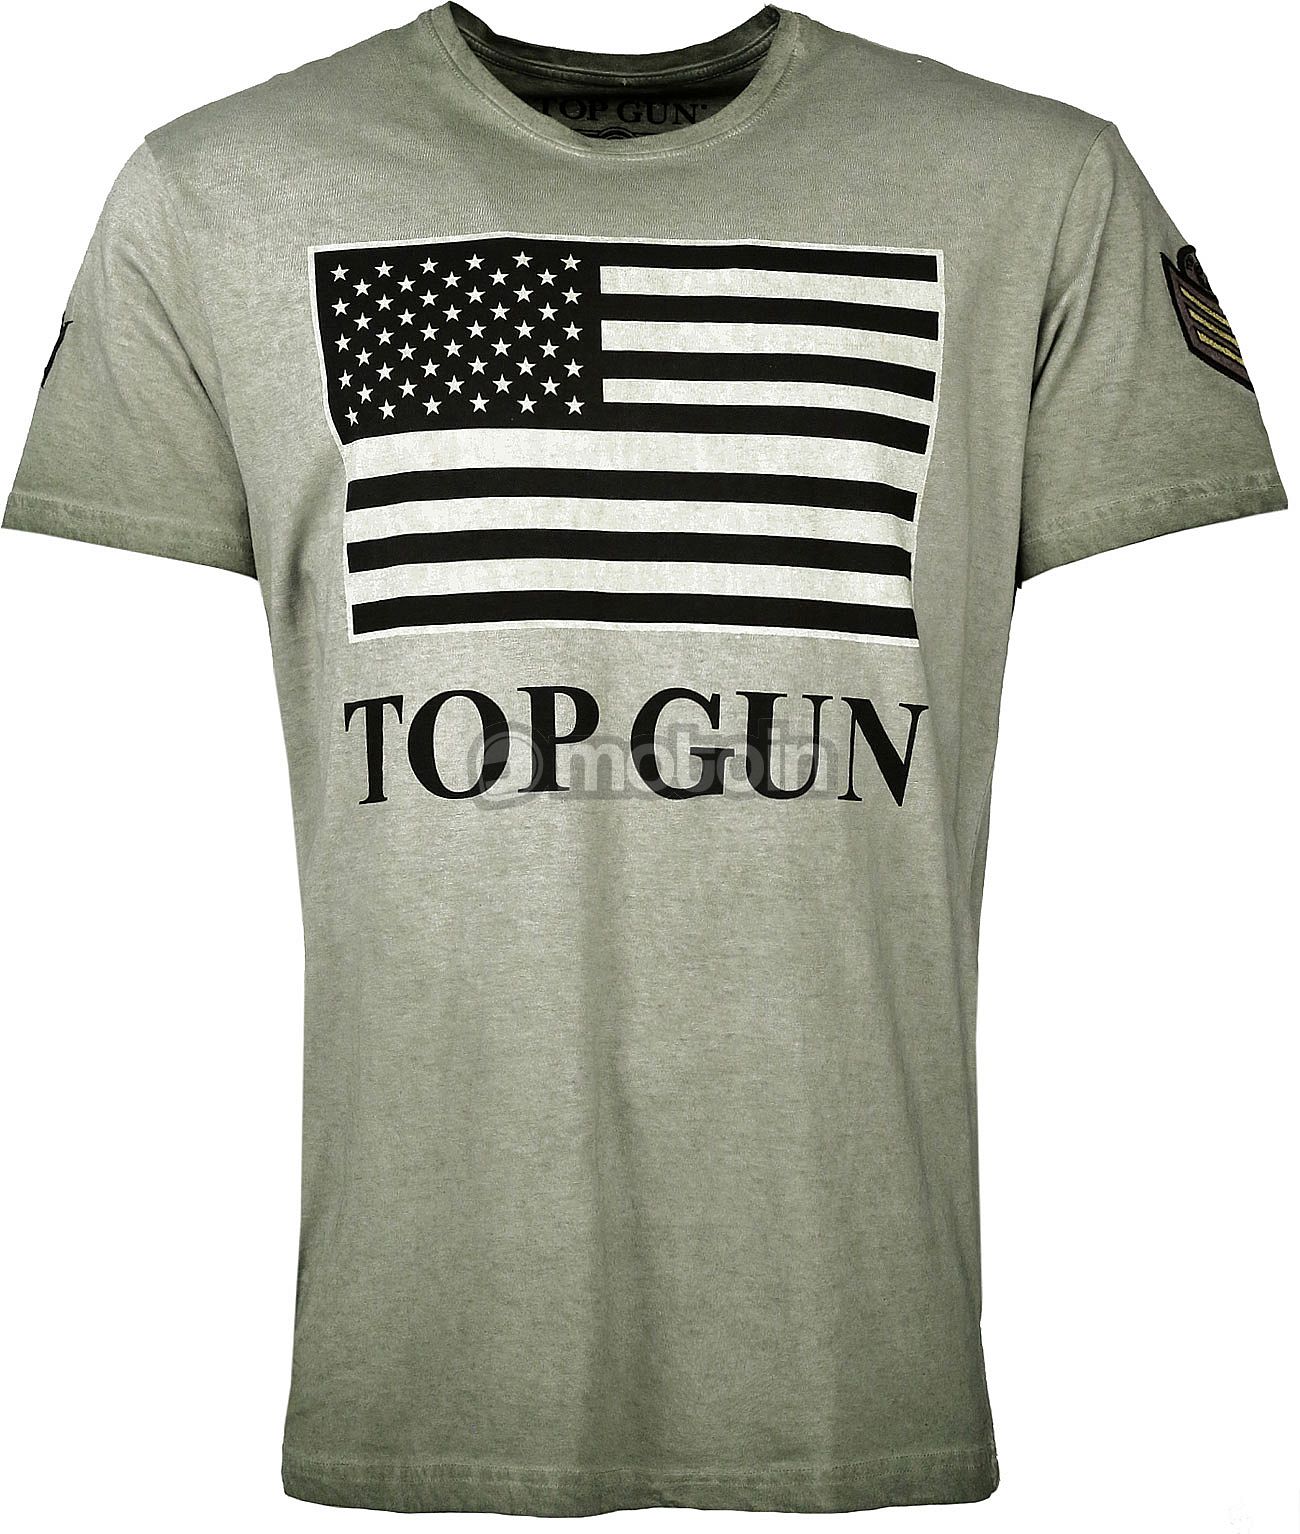 Top Gun Search, camiseta